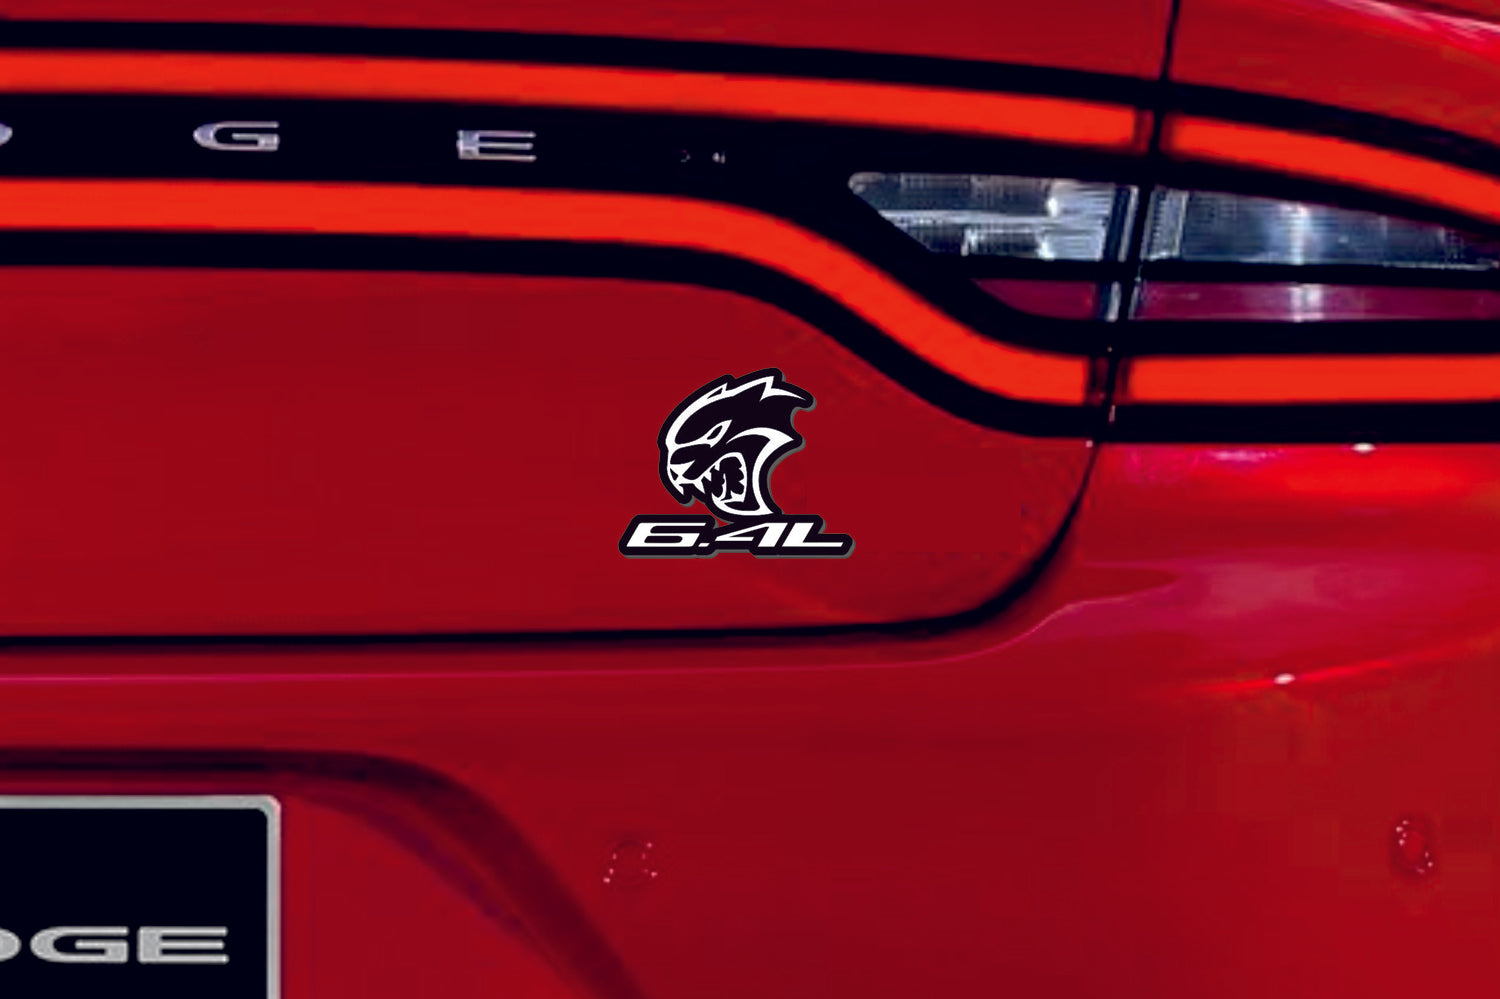 Dodge tailgate trunk rear emblem with Hellcat 6.4L logo - decoinfabric